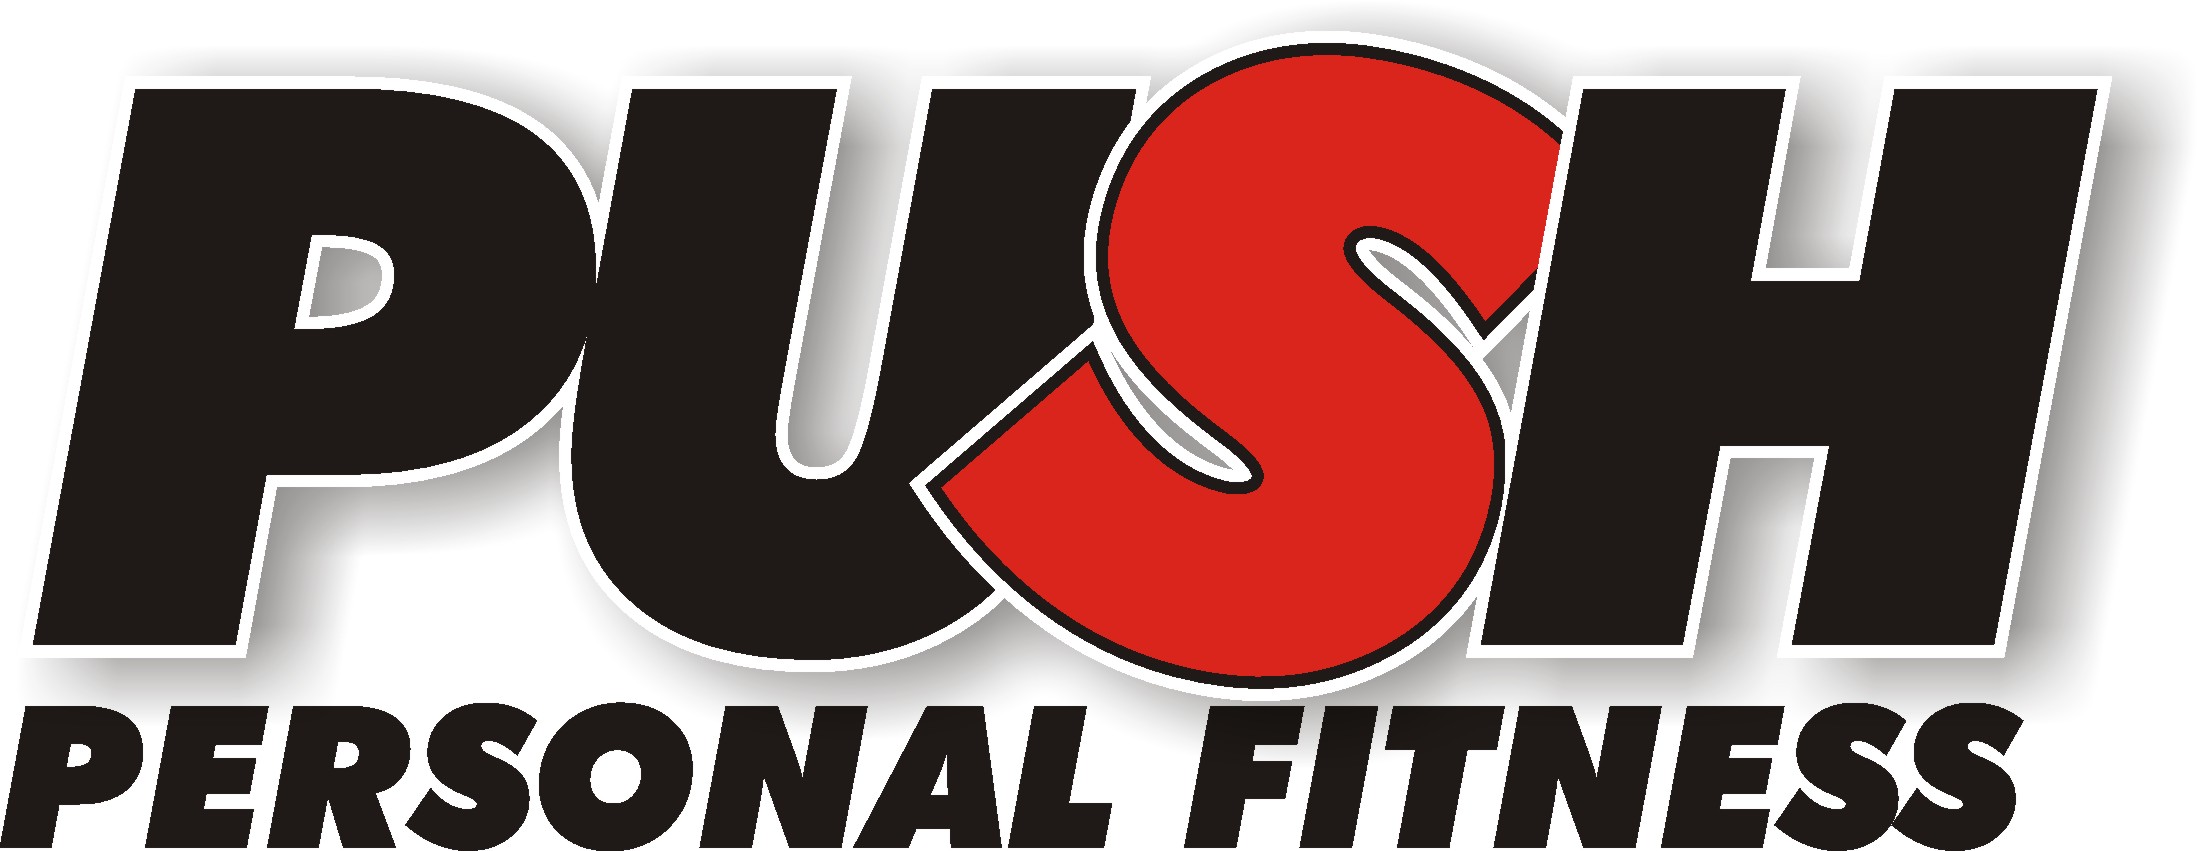 Push Personal Fitness logo